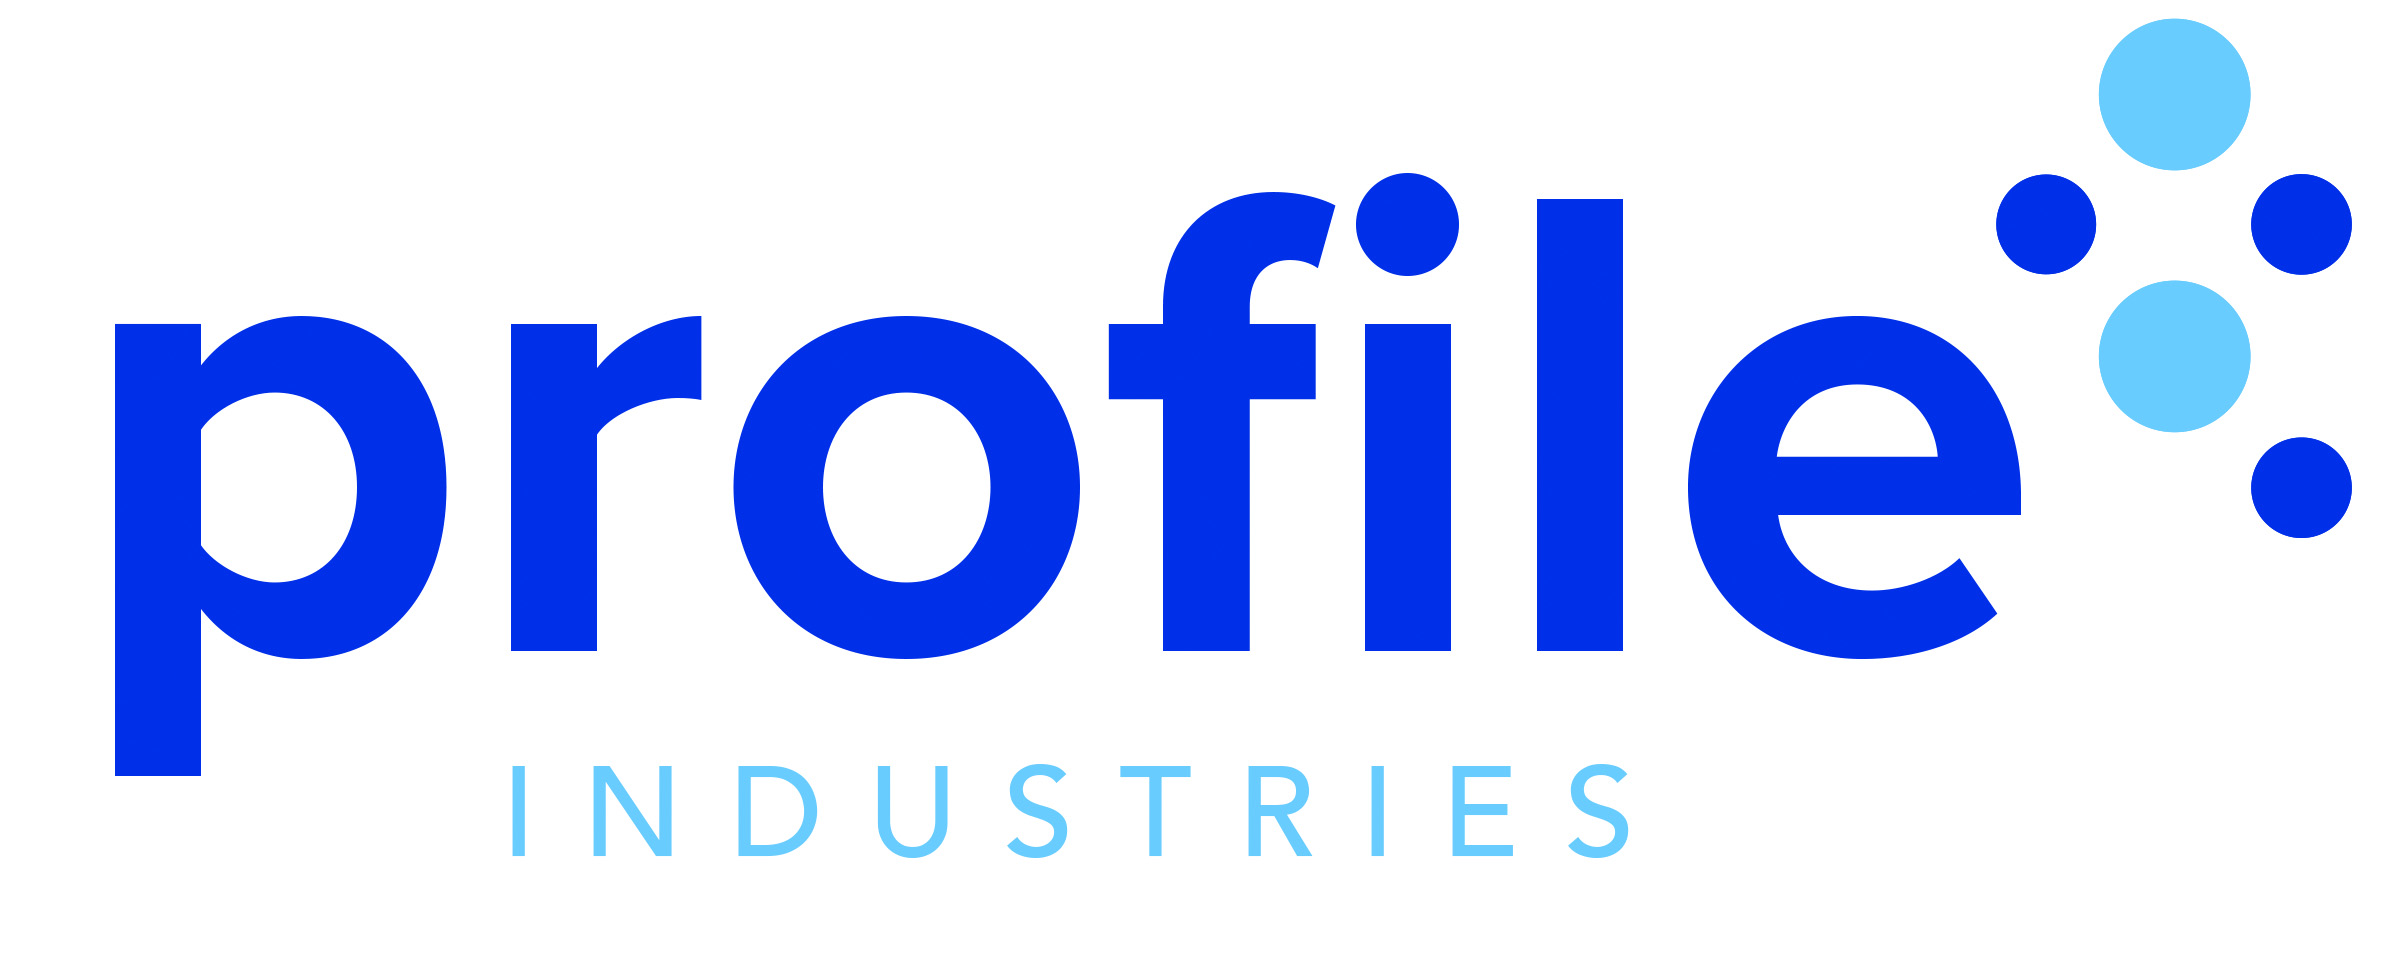 Profile Industries, Inc.